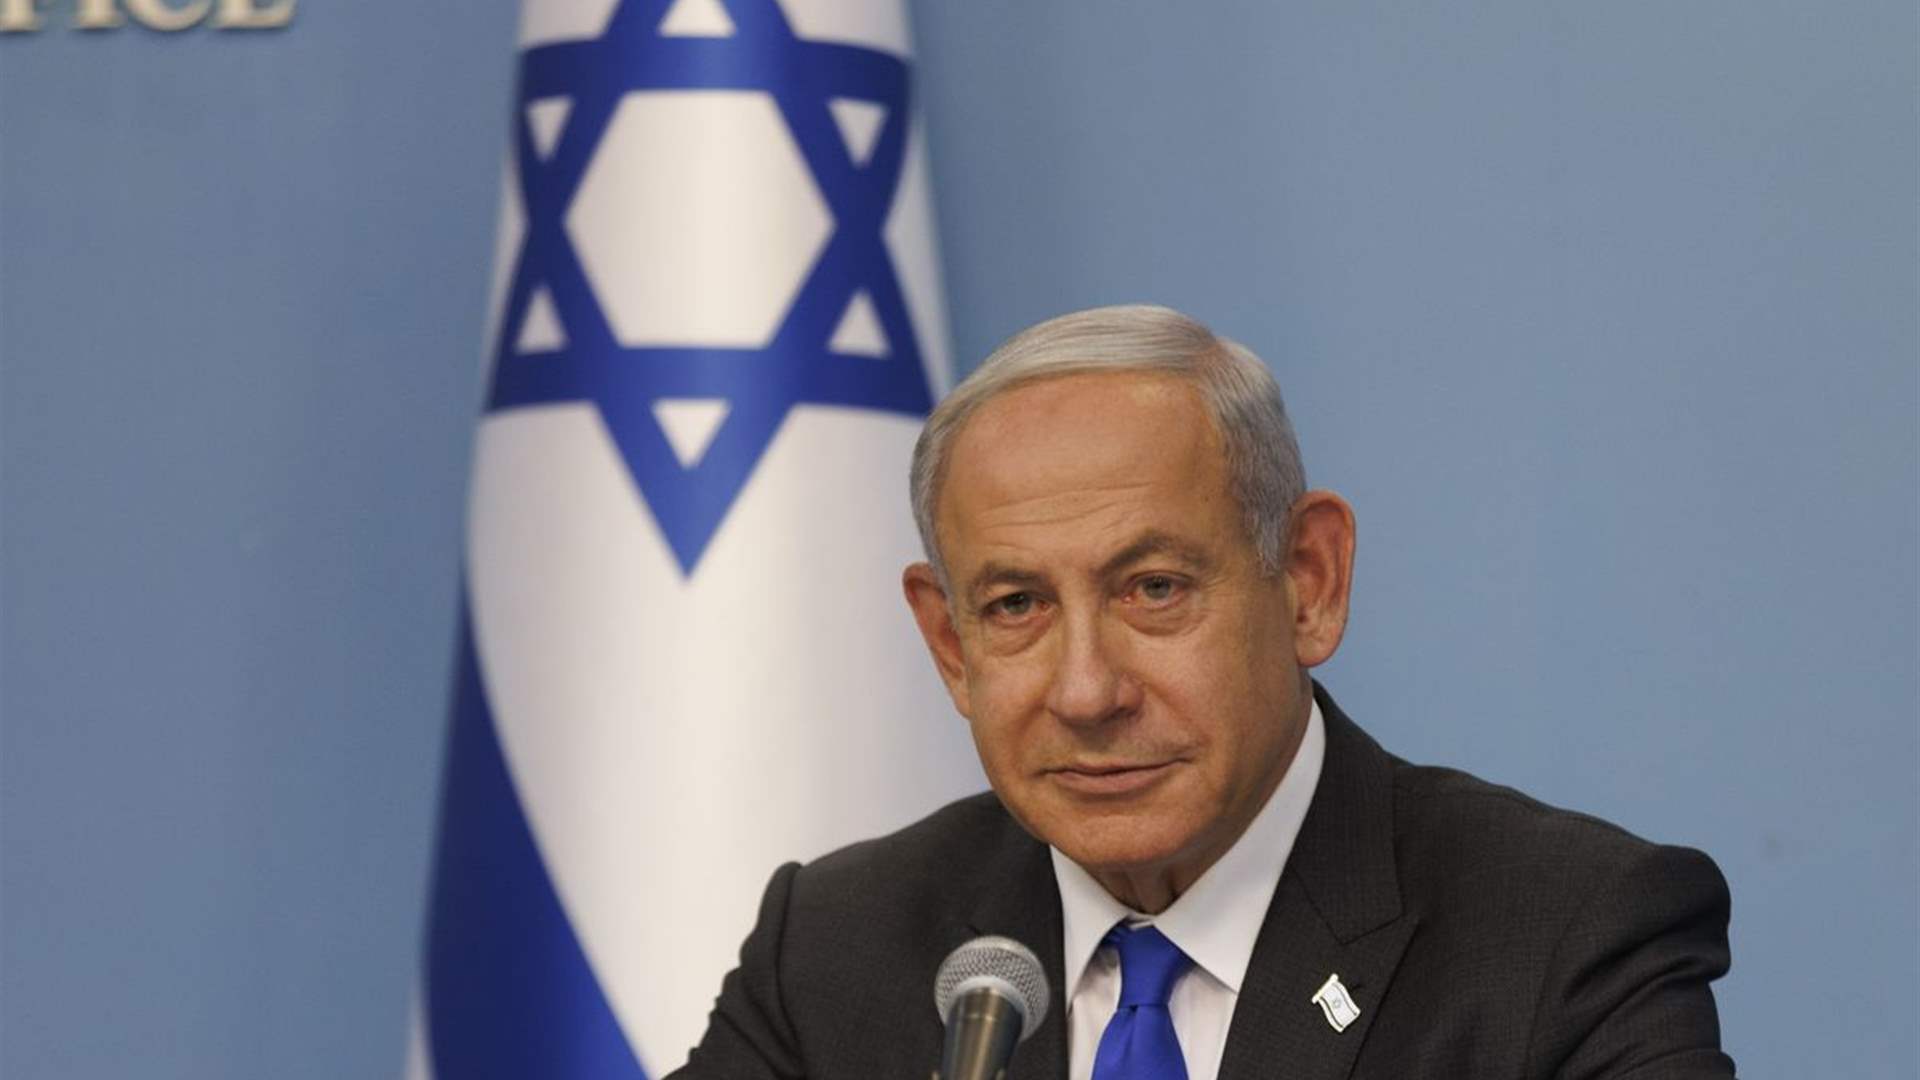 Israel steps up talks With Saudi Arabia over ties to combat Iran